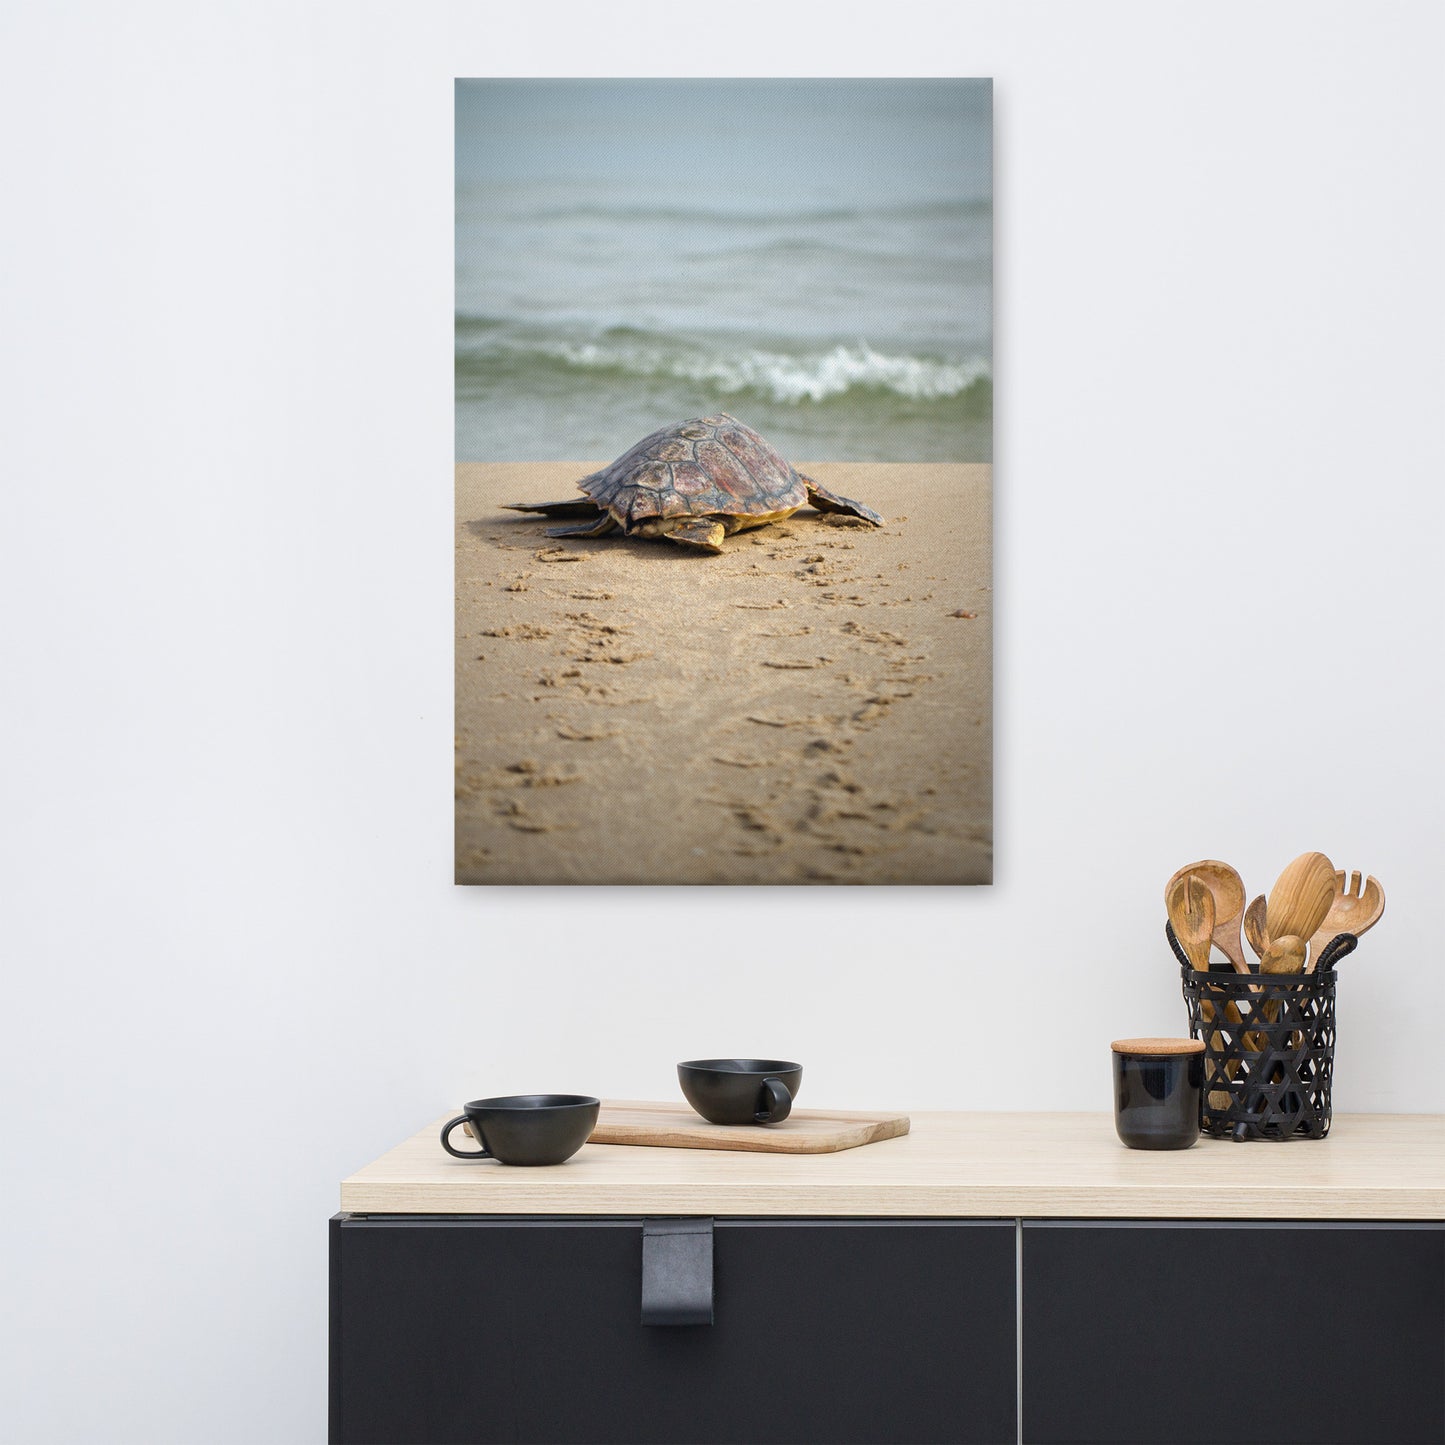 Modern Kitchen Canvas: Baby Loggerhead Sea Turtle Hatchling at the Shore - Coastal / Wildlife / Marine Animal / Nature Photograph Canvas Wall Art Print - Artwork